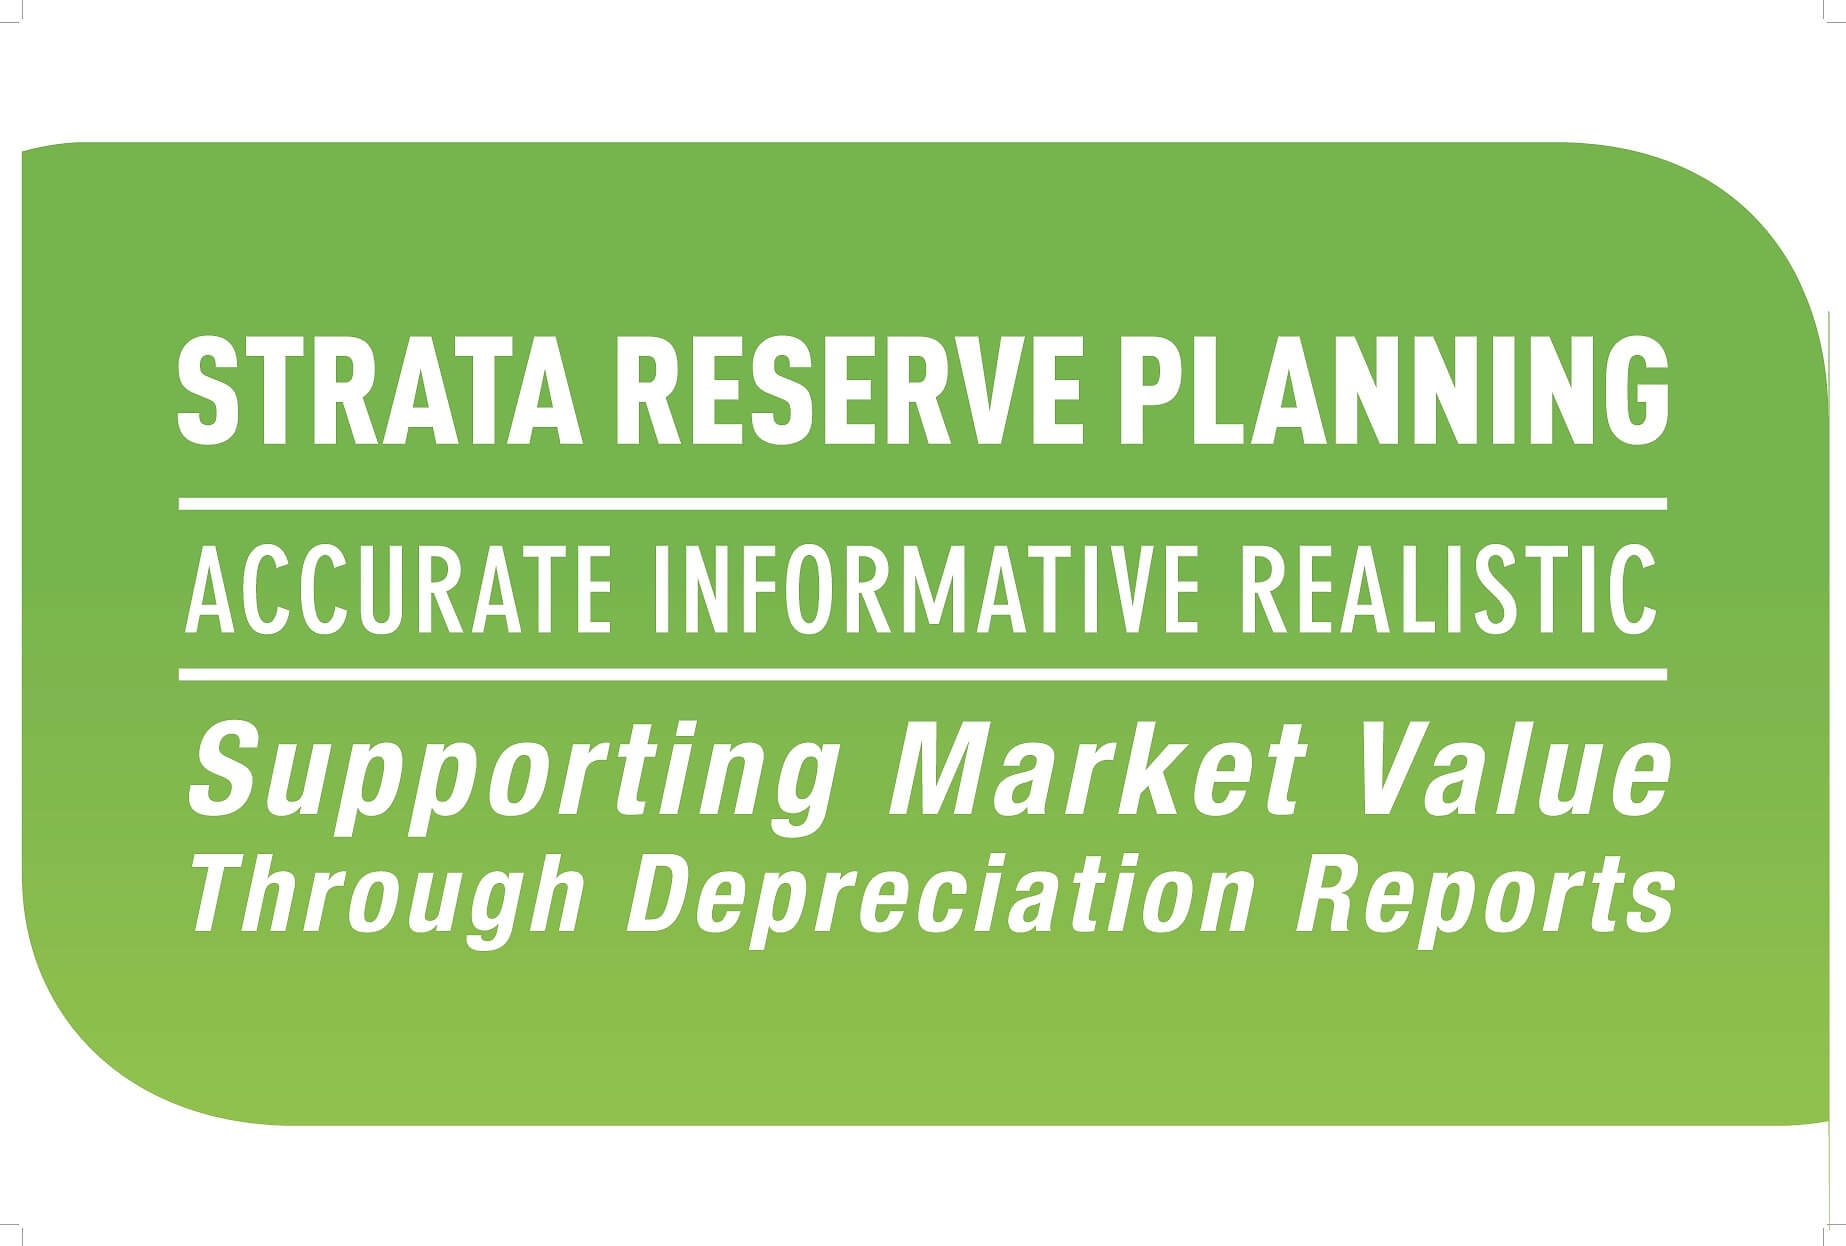 Strata Reserve Planning